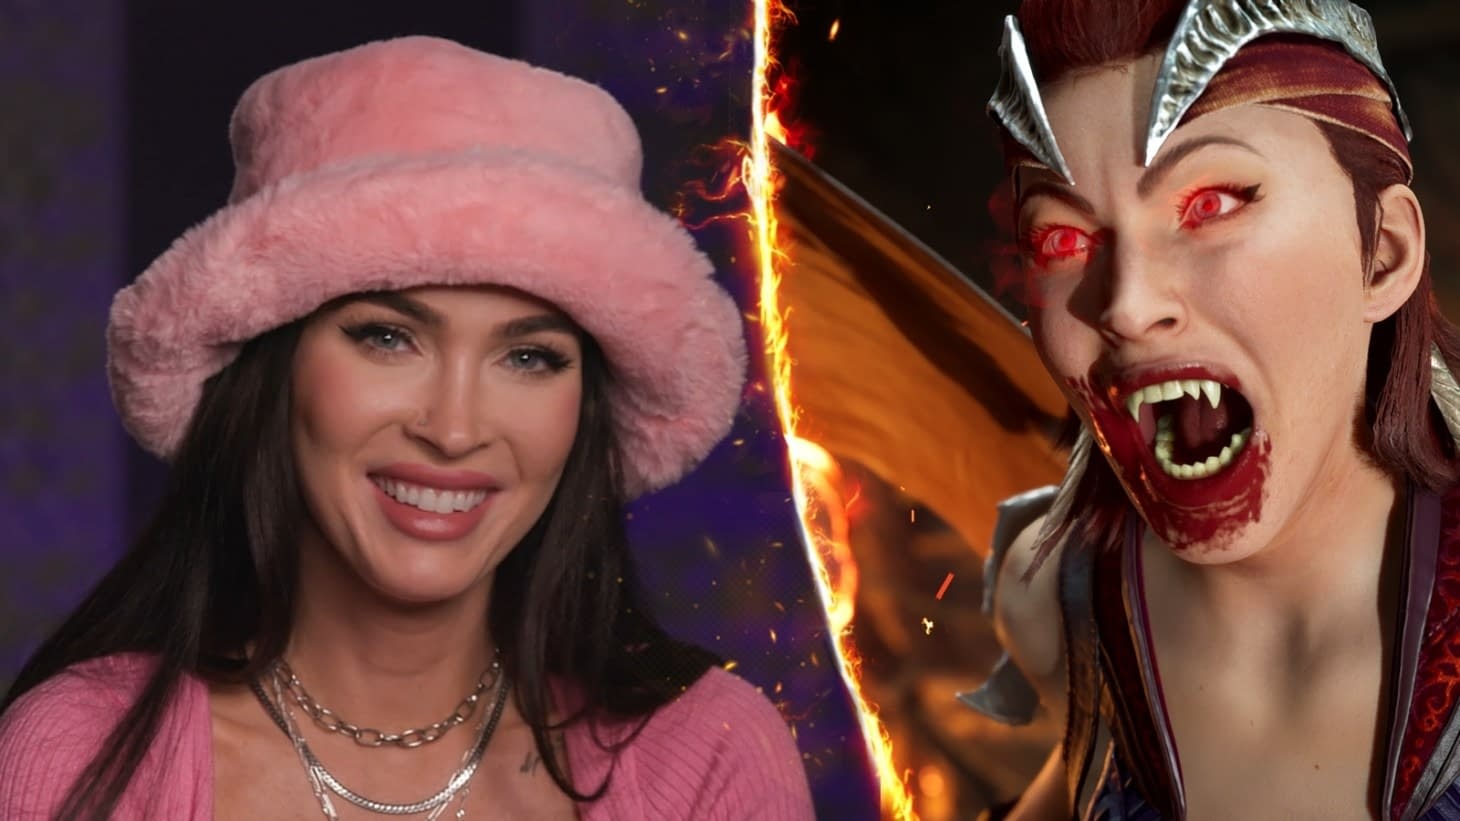 Mortal Kombat 1 was included in the Nitara Character that Megan Fox Voiceed